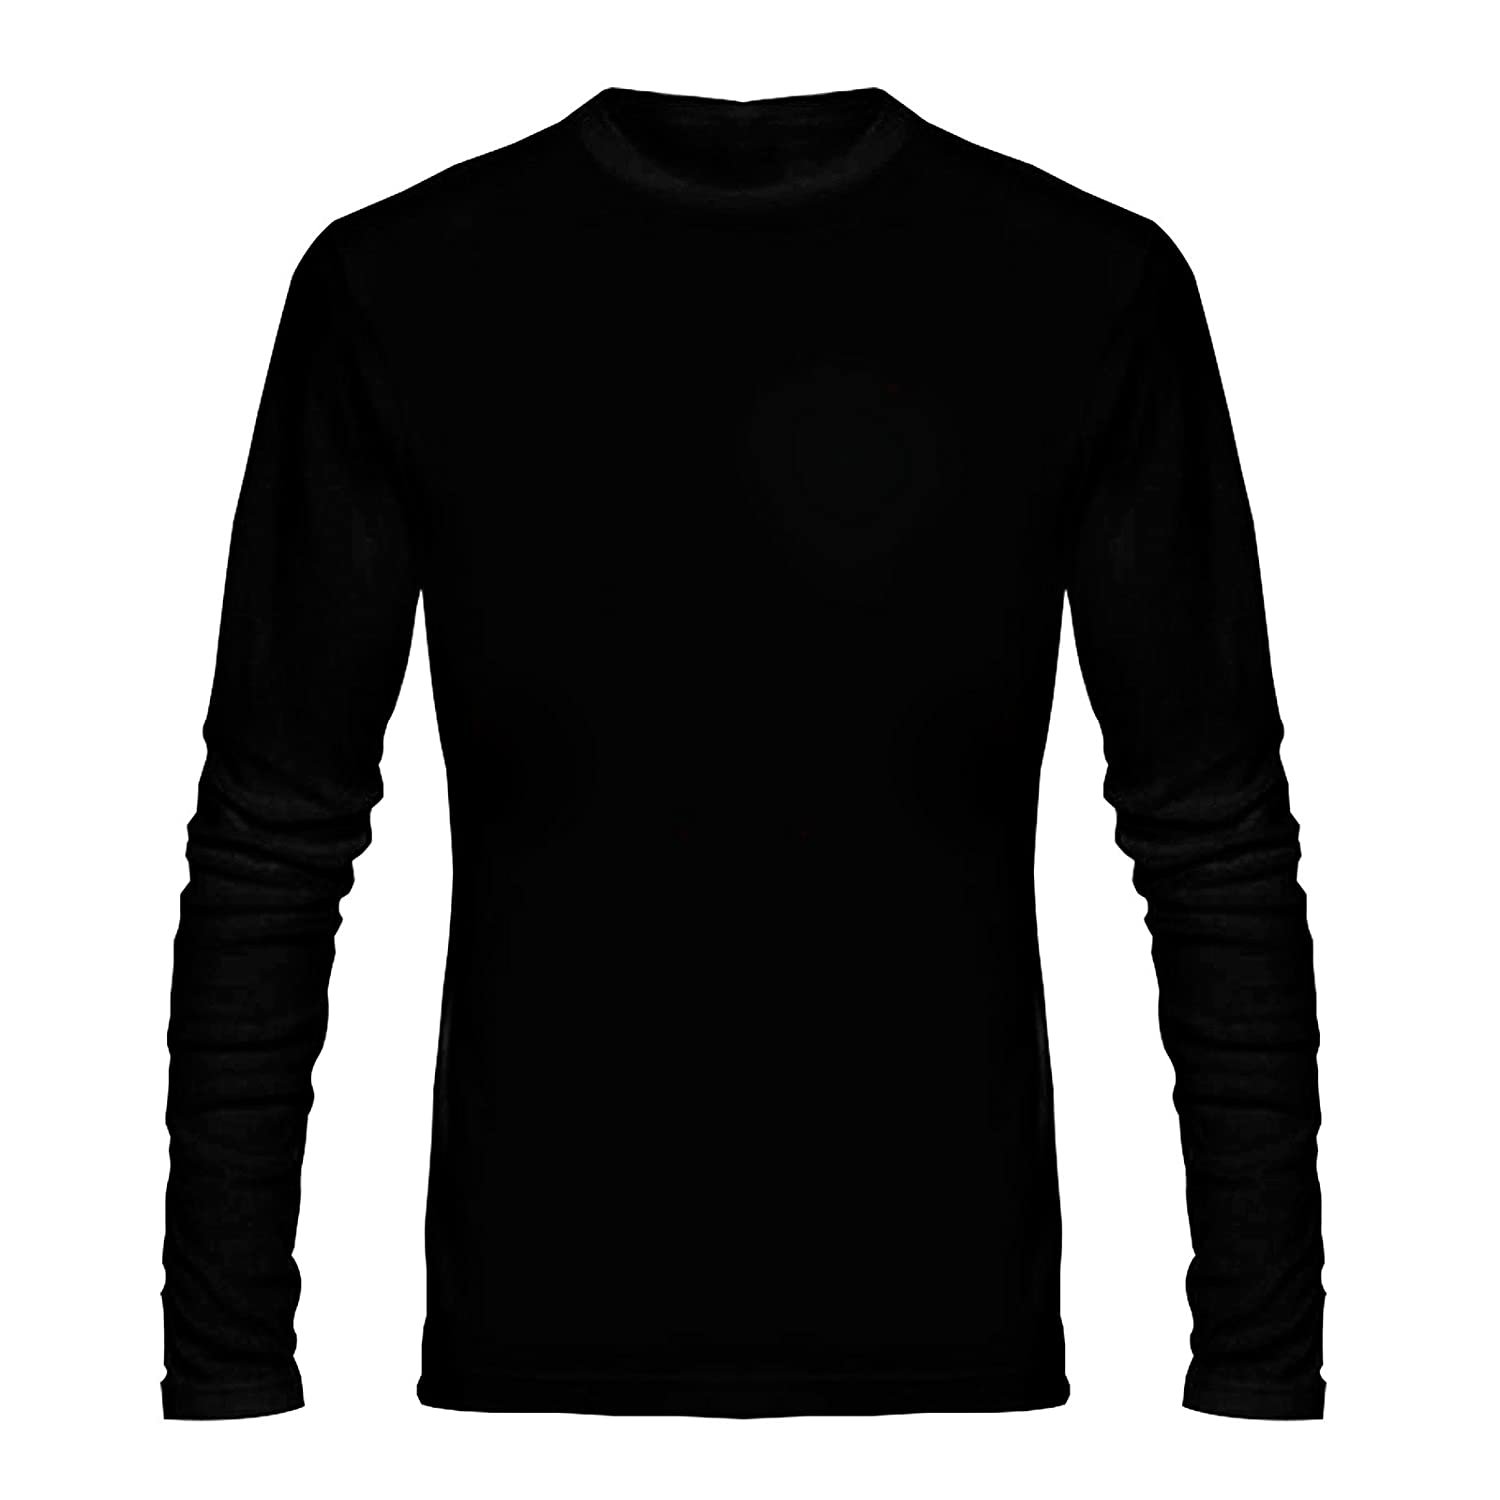 Long sleeved t shirt. Черная футболка с длинным рукавом. Футболка с горлом. Футболка длинный рукав мужская. Черная футболка с горлом.